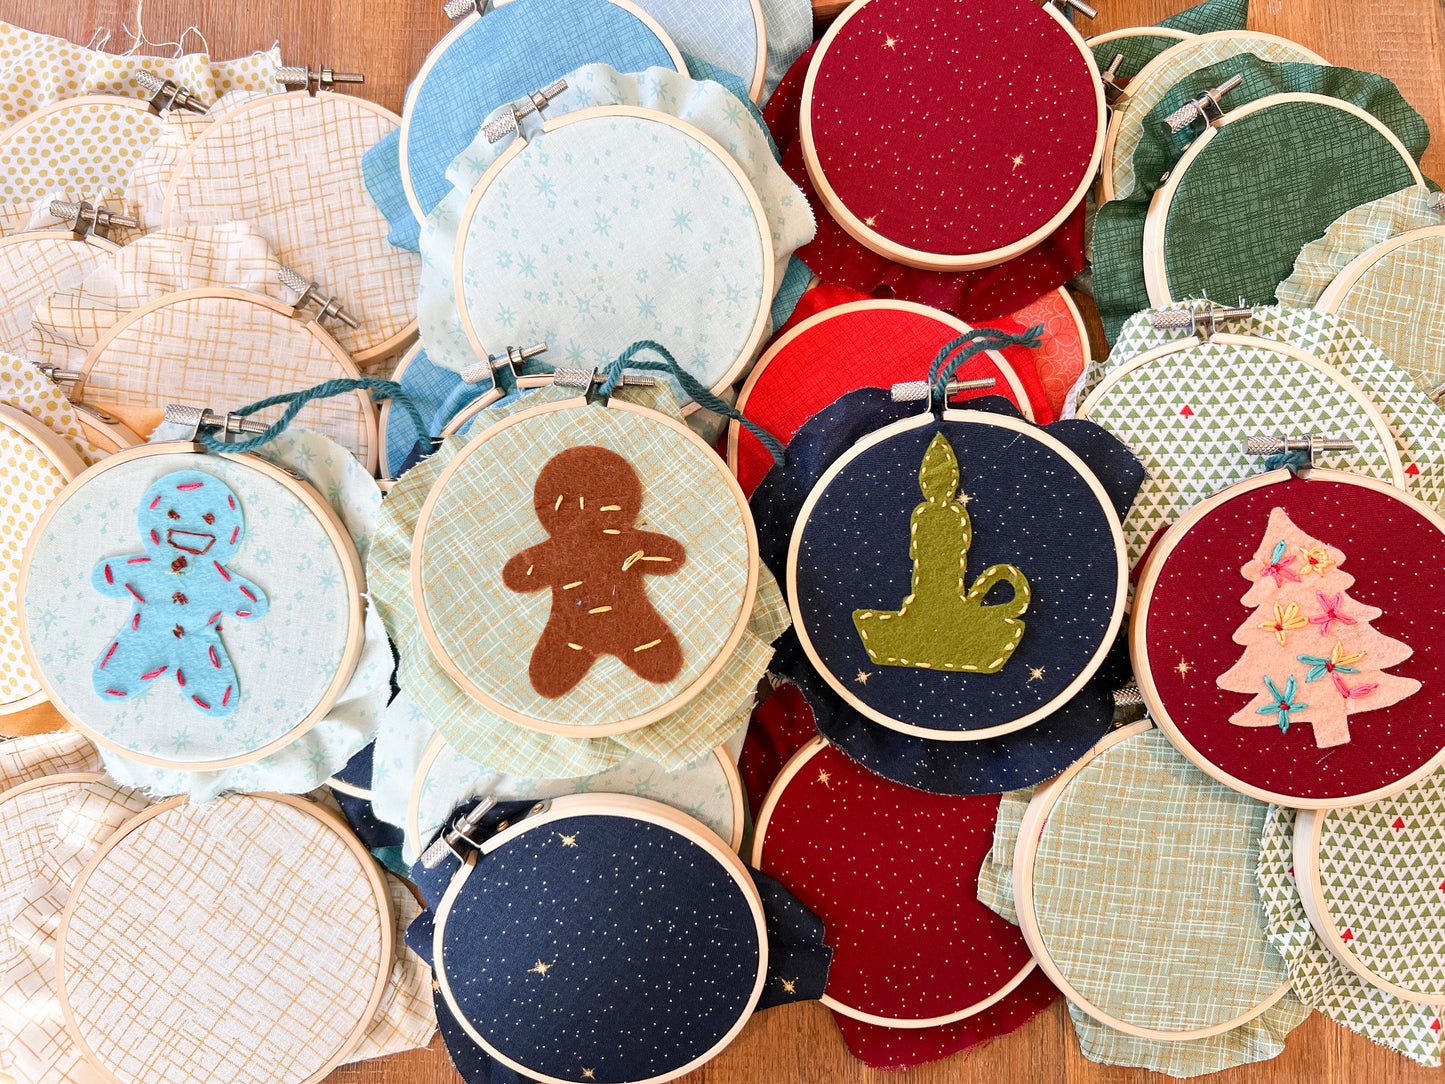 Embroidery for Kids | Ornament Complete DIY Kit for Children 3 inch hoop handmade Christmas Tree Ornament | Teacher Gift Grandparent Craft